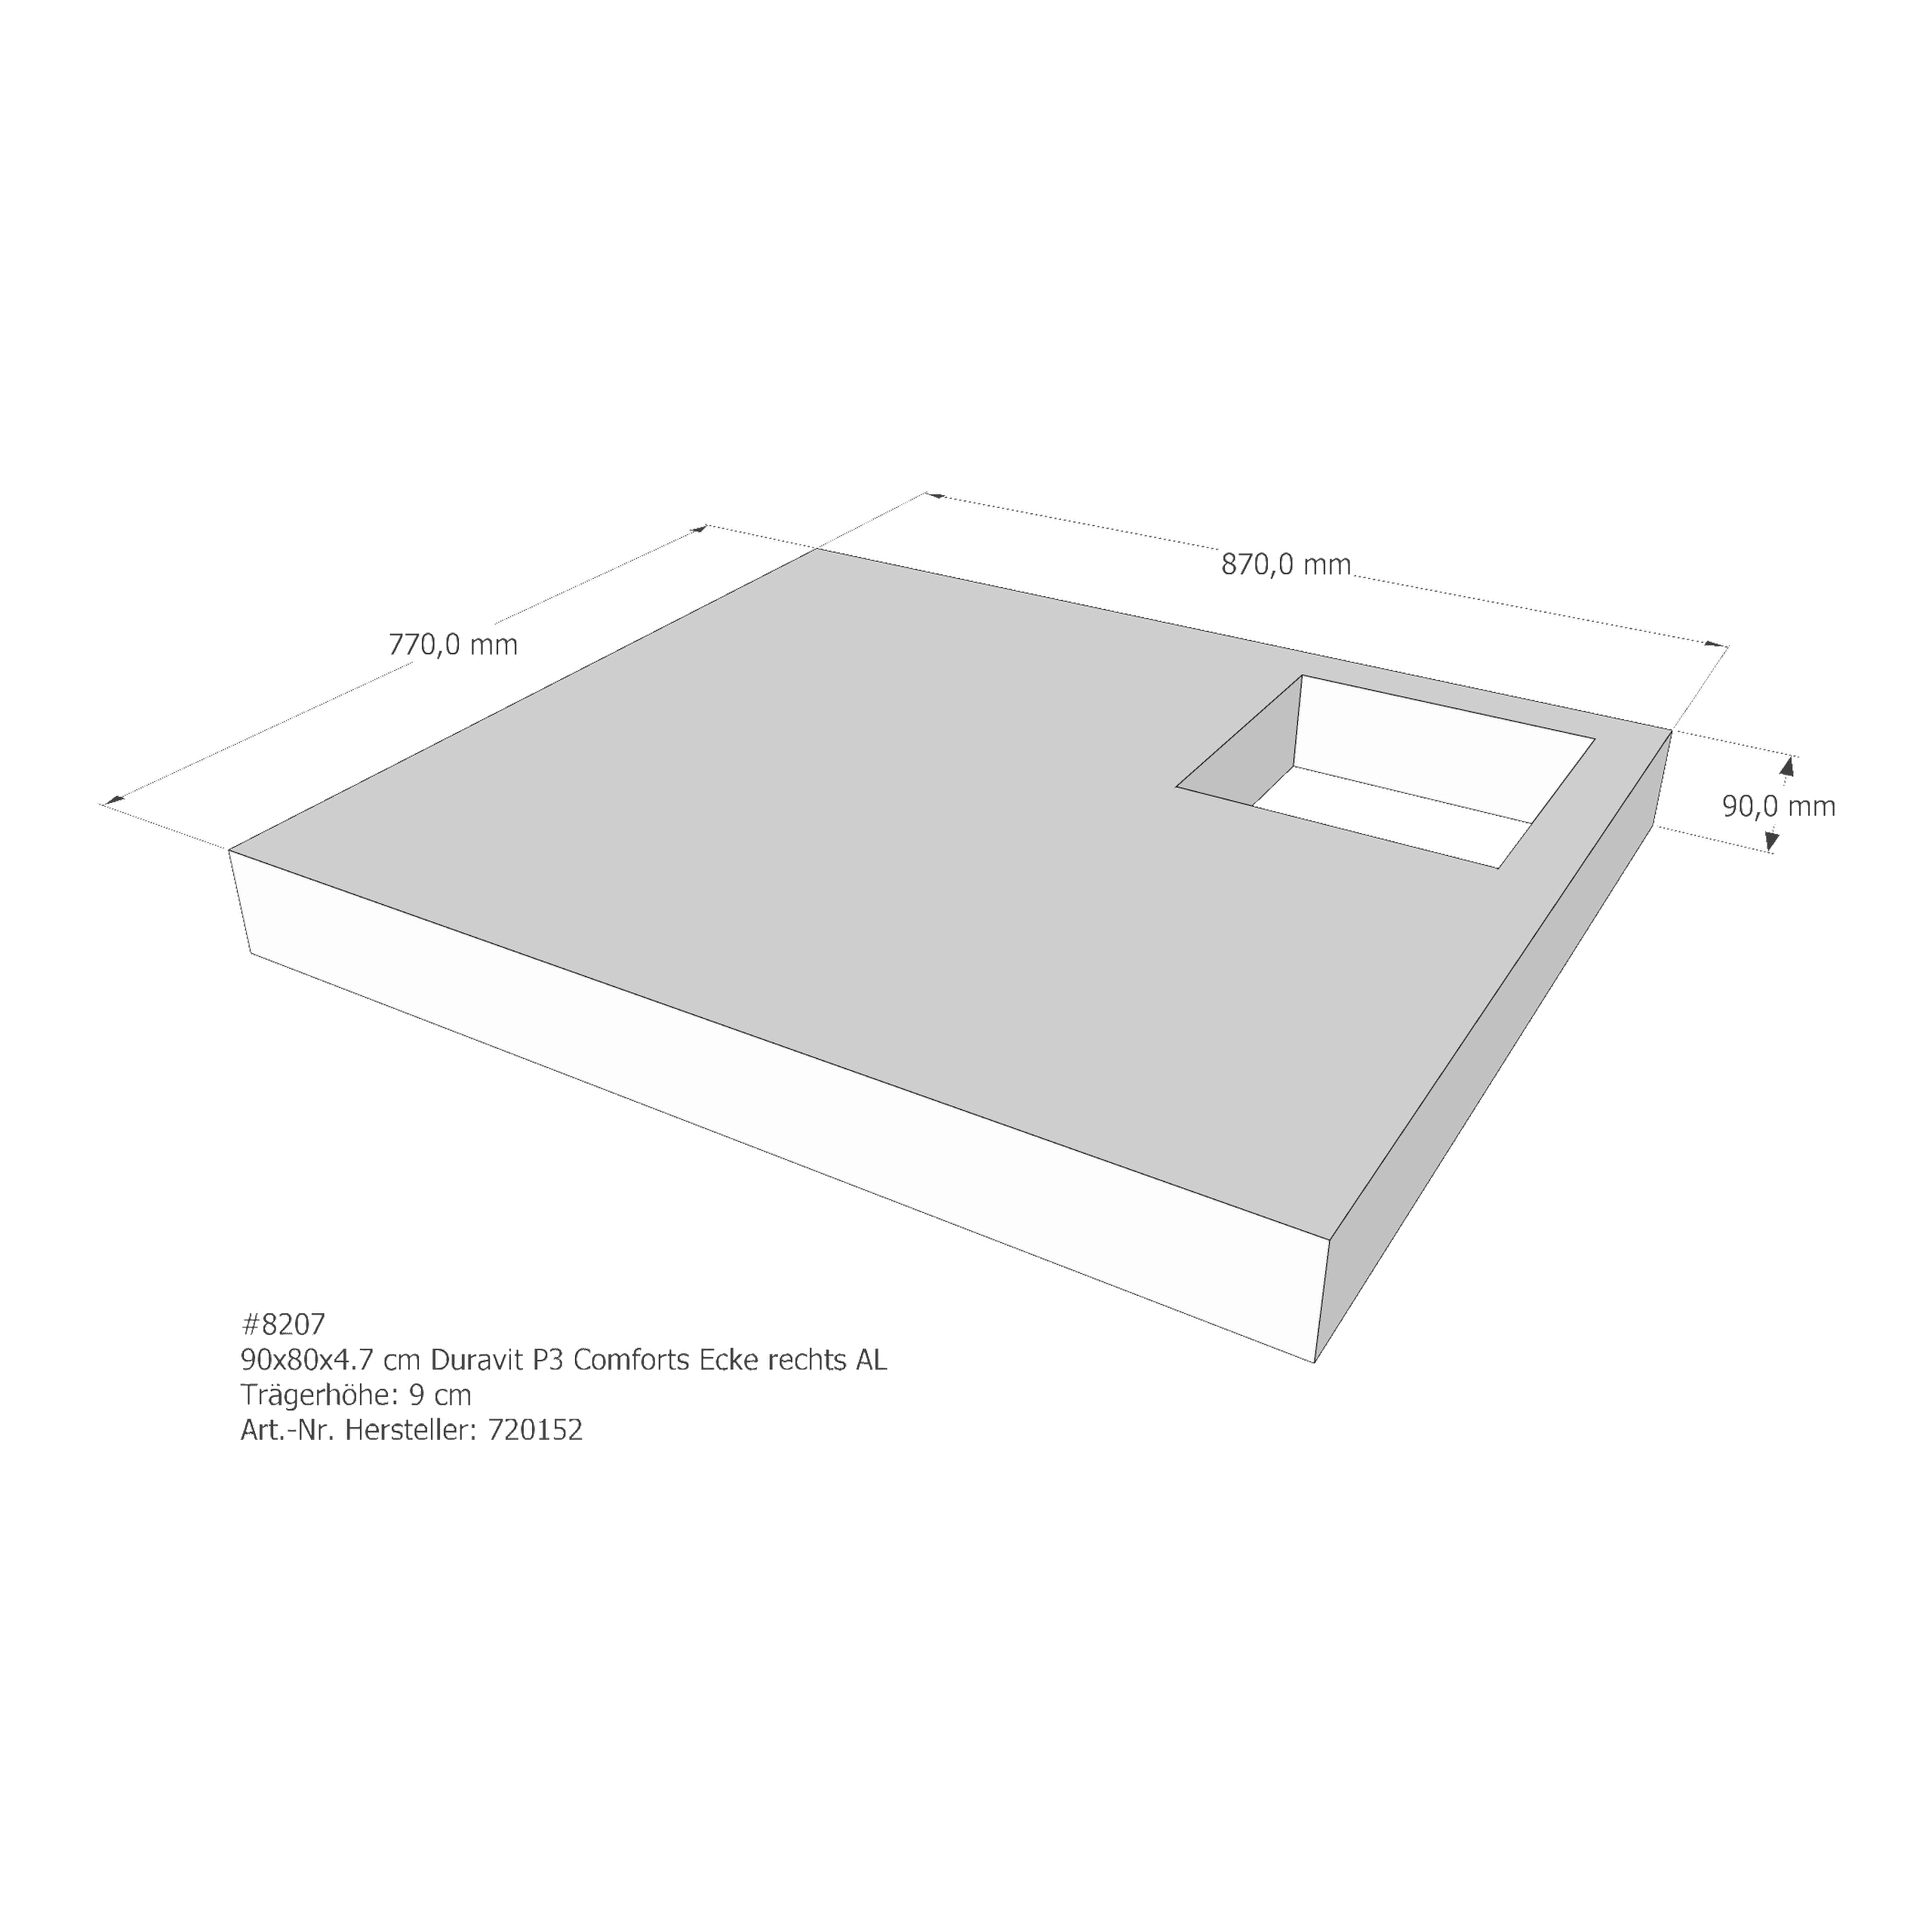 Duschwannenträger Duravit P3 Comforts 90x80x4,7 cm Ecke rechts AL